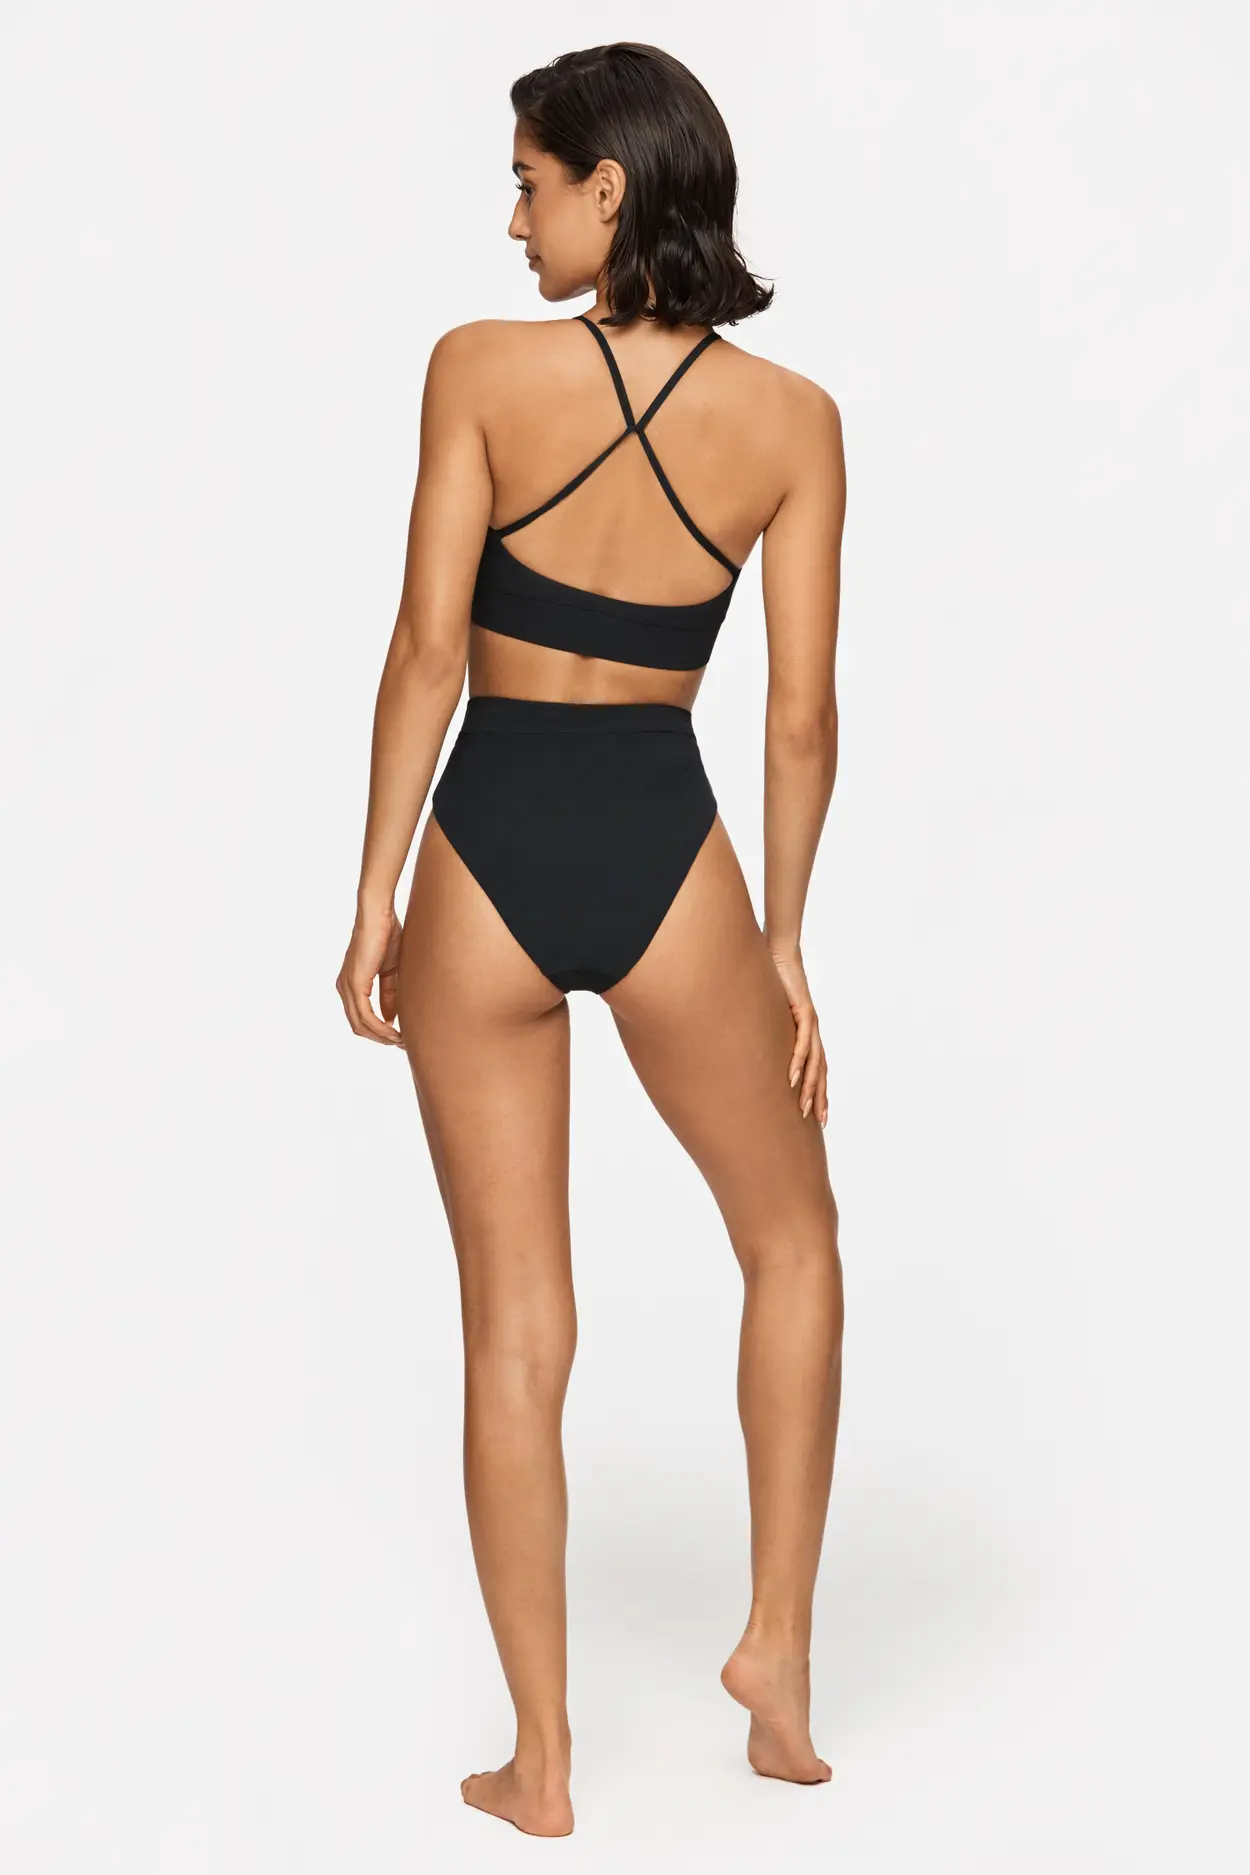 Bondi I Bikini Top I Buy Online I STRONGER